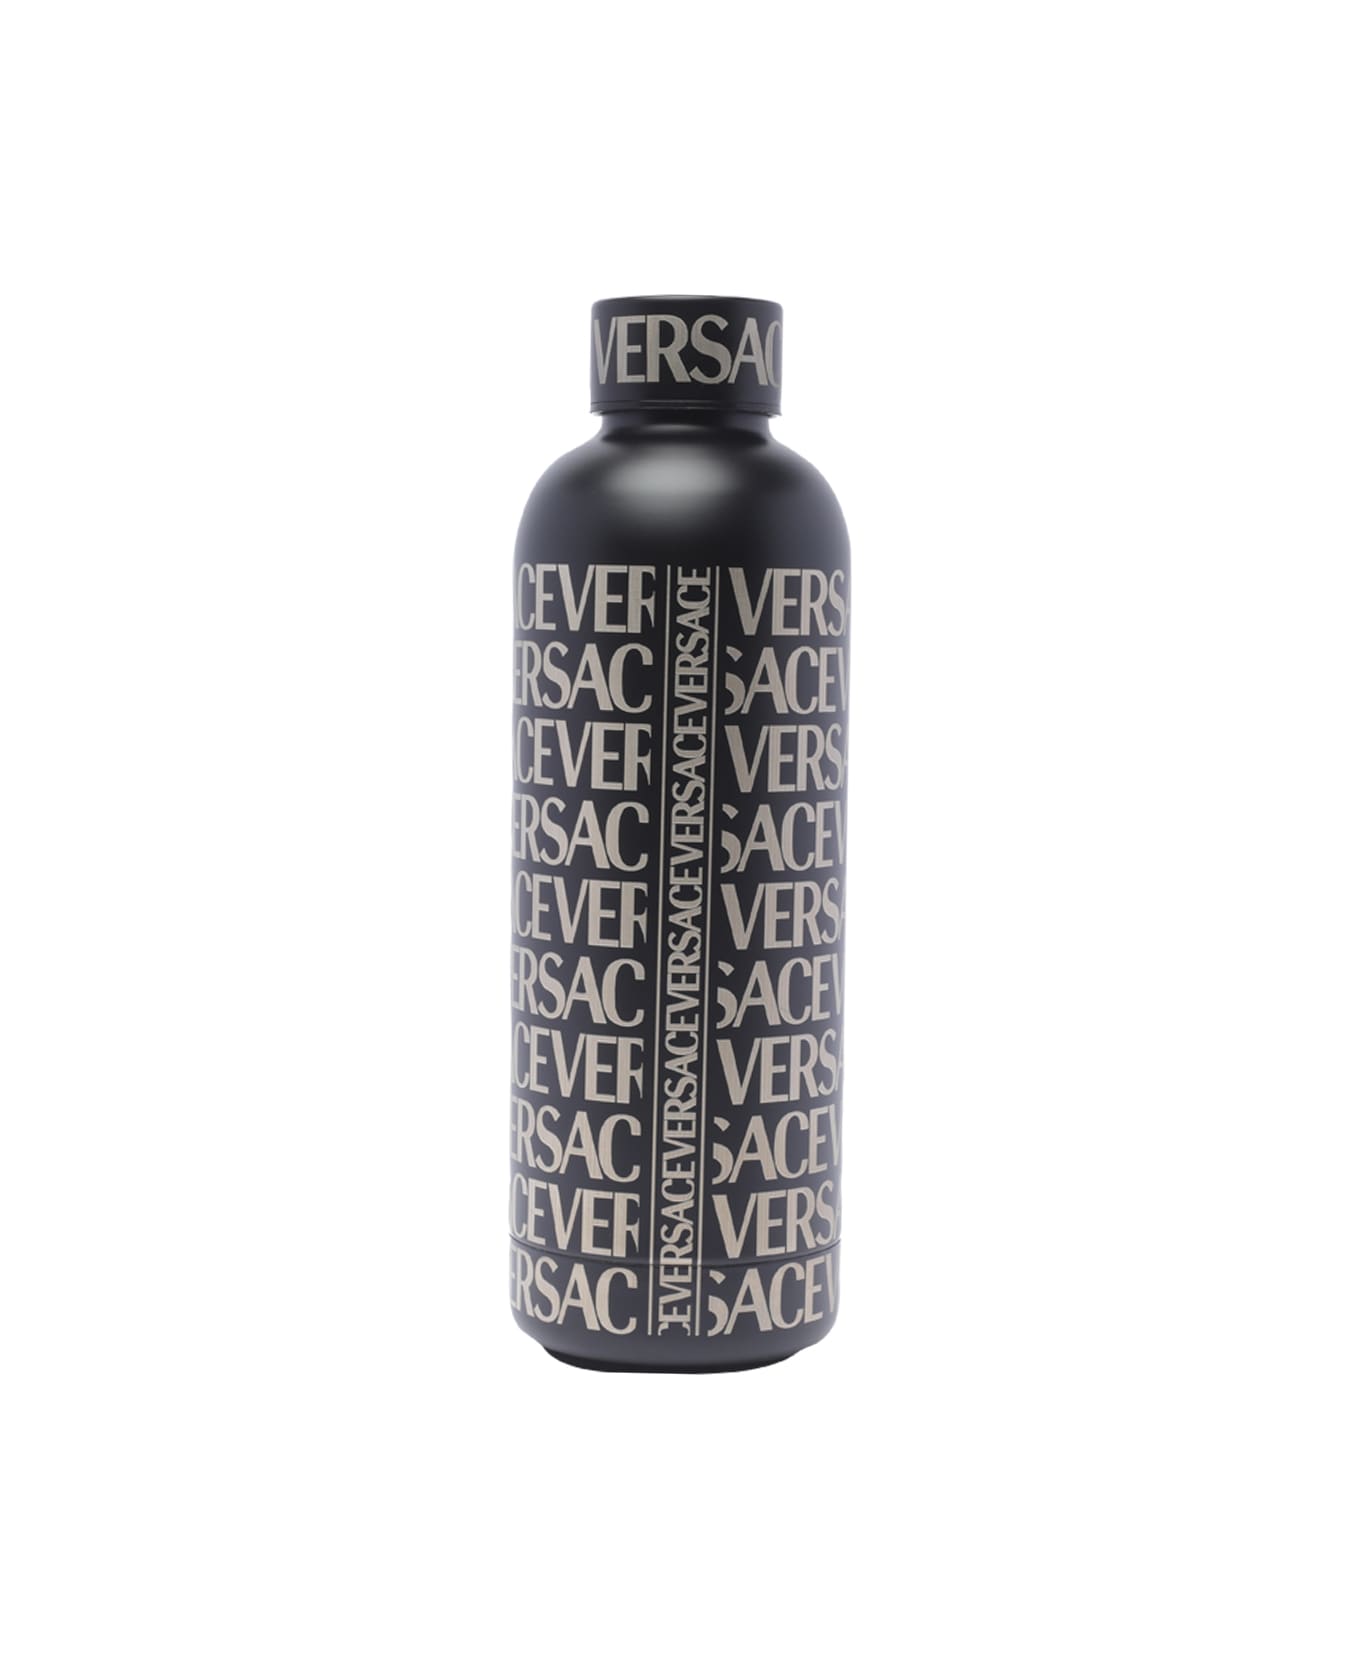 Versace Allover Water Bottle - Black